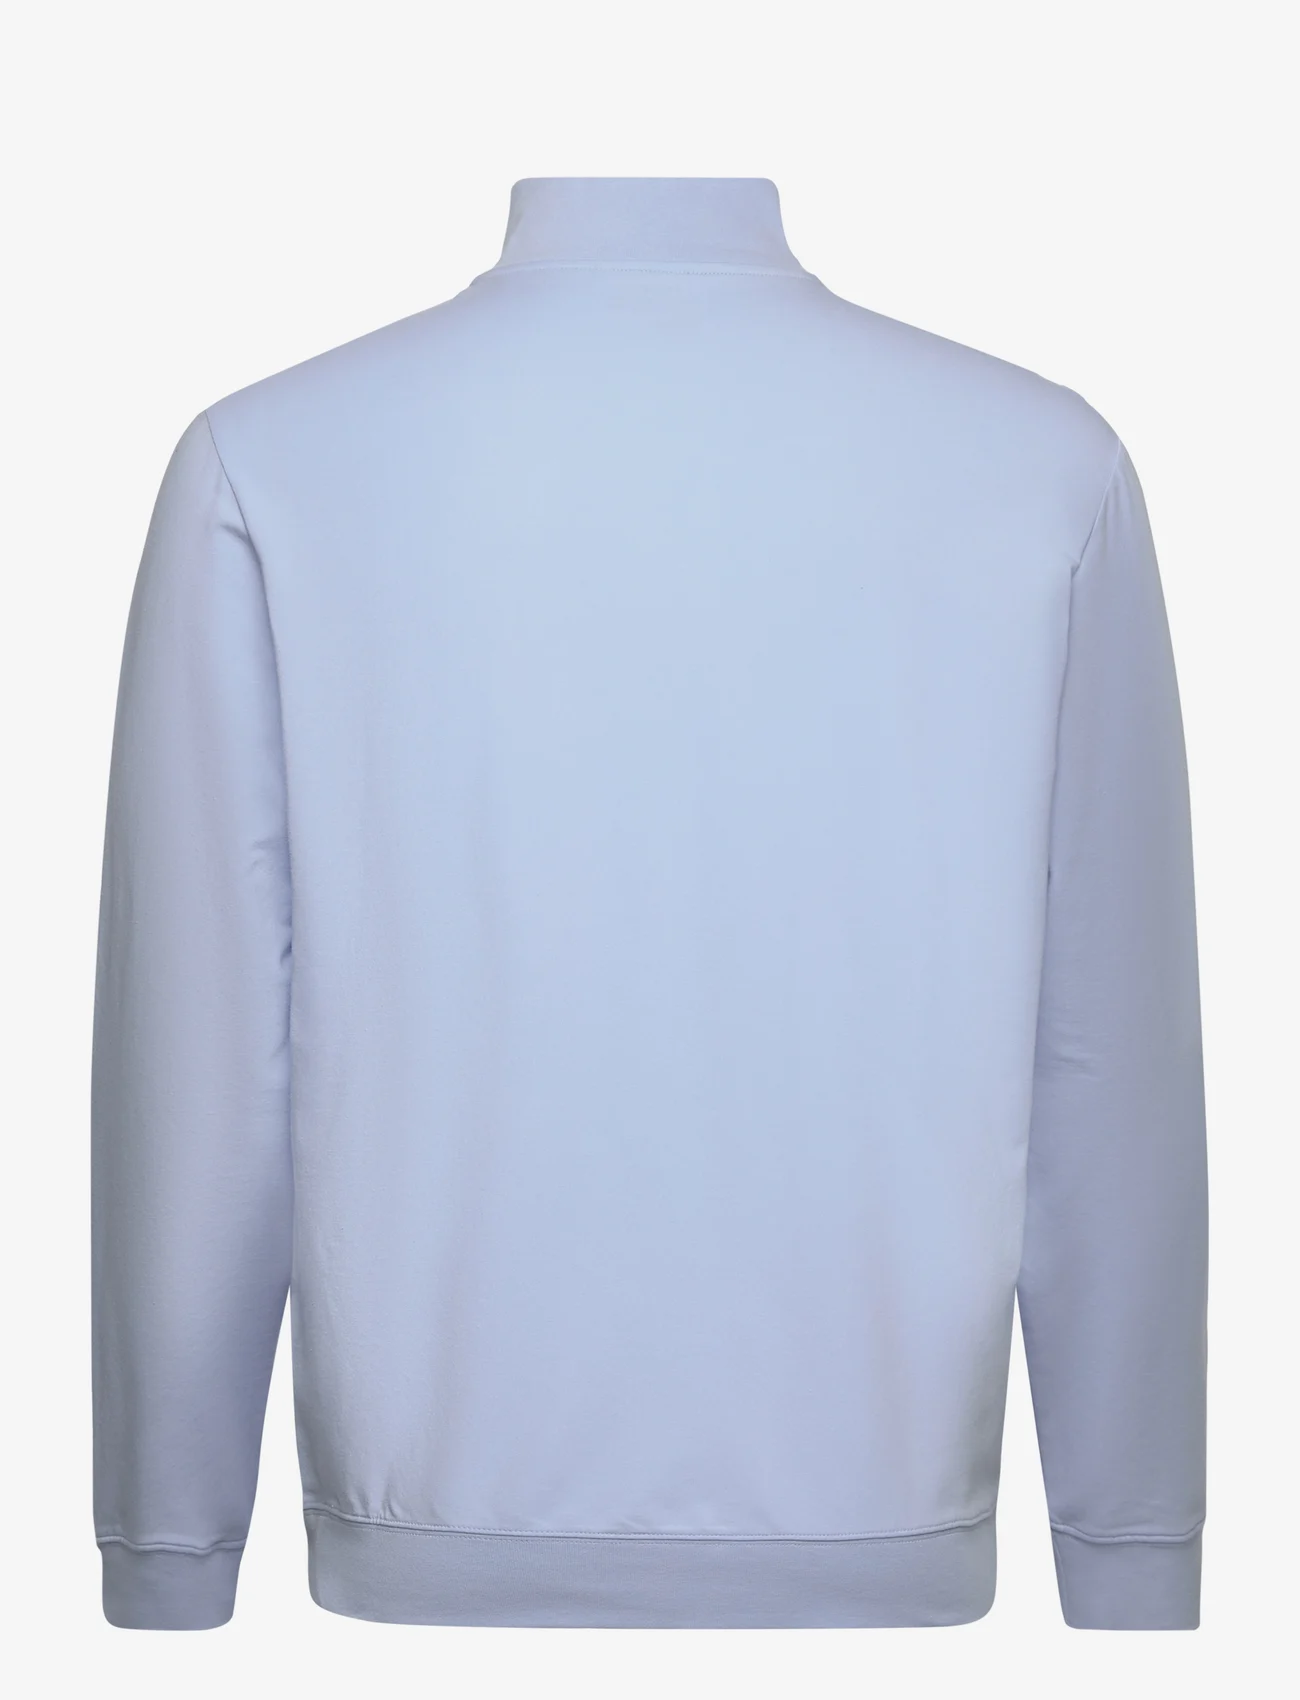 Polo Ralph Lauren - Classic Water-Repellent Terry Sweatshirt - basic adījumi - office blue - 1